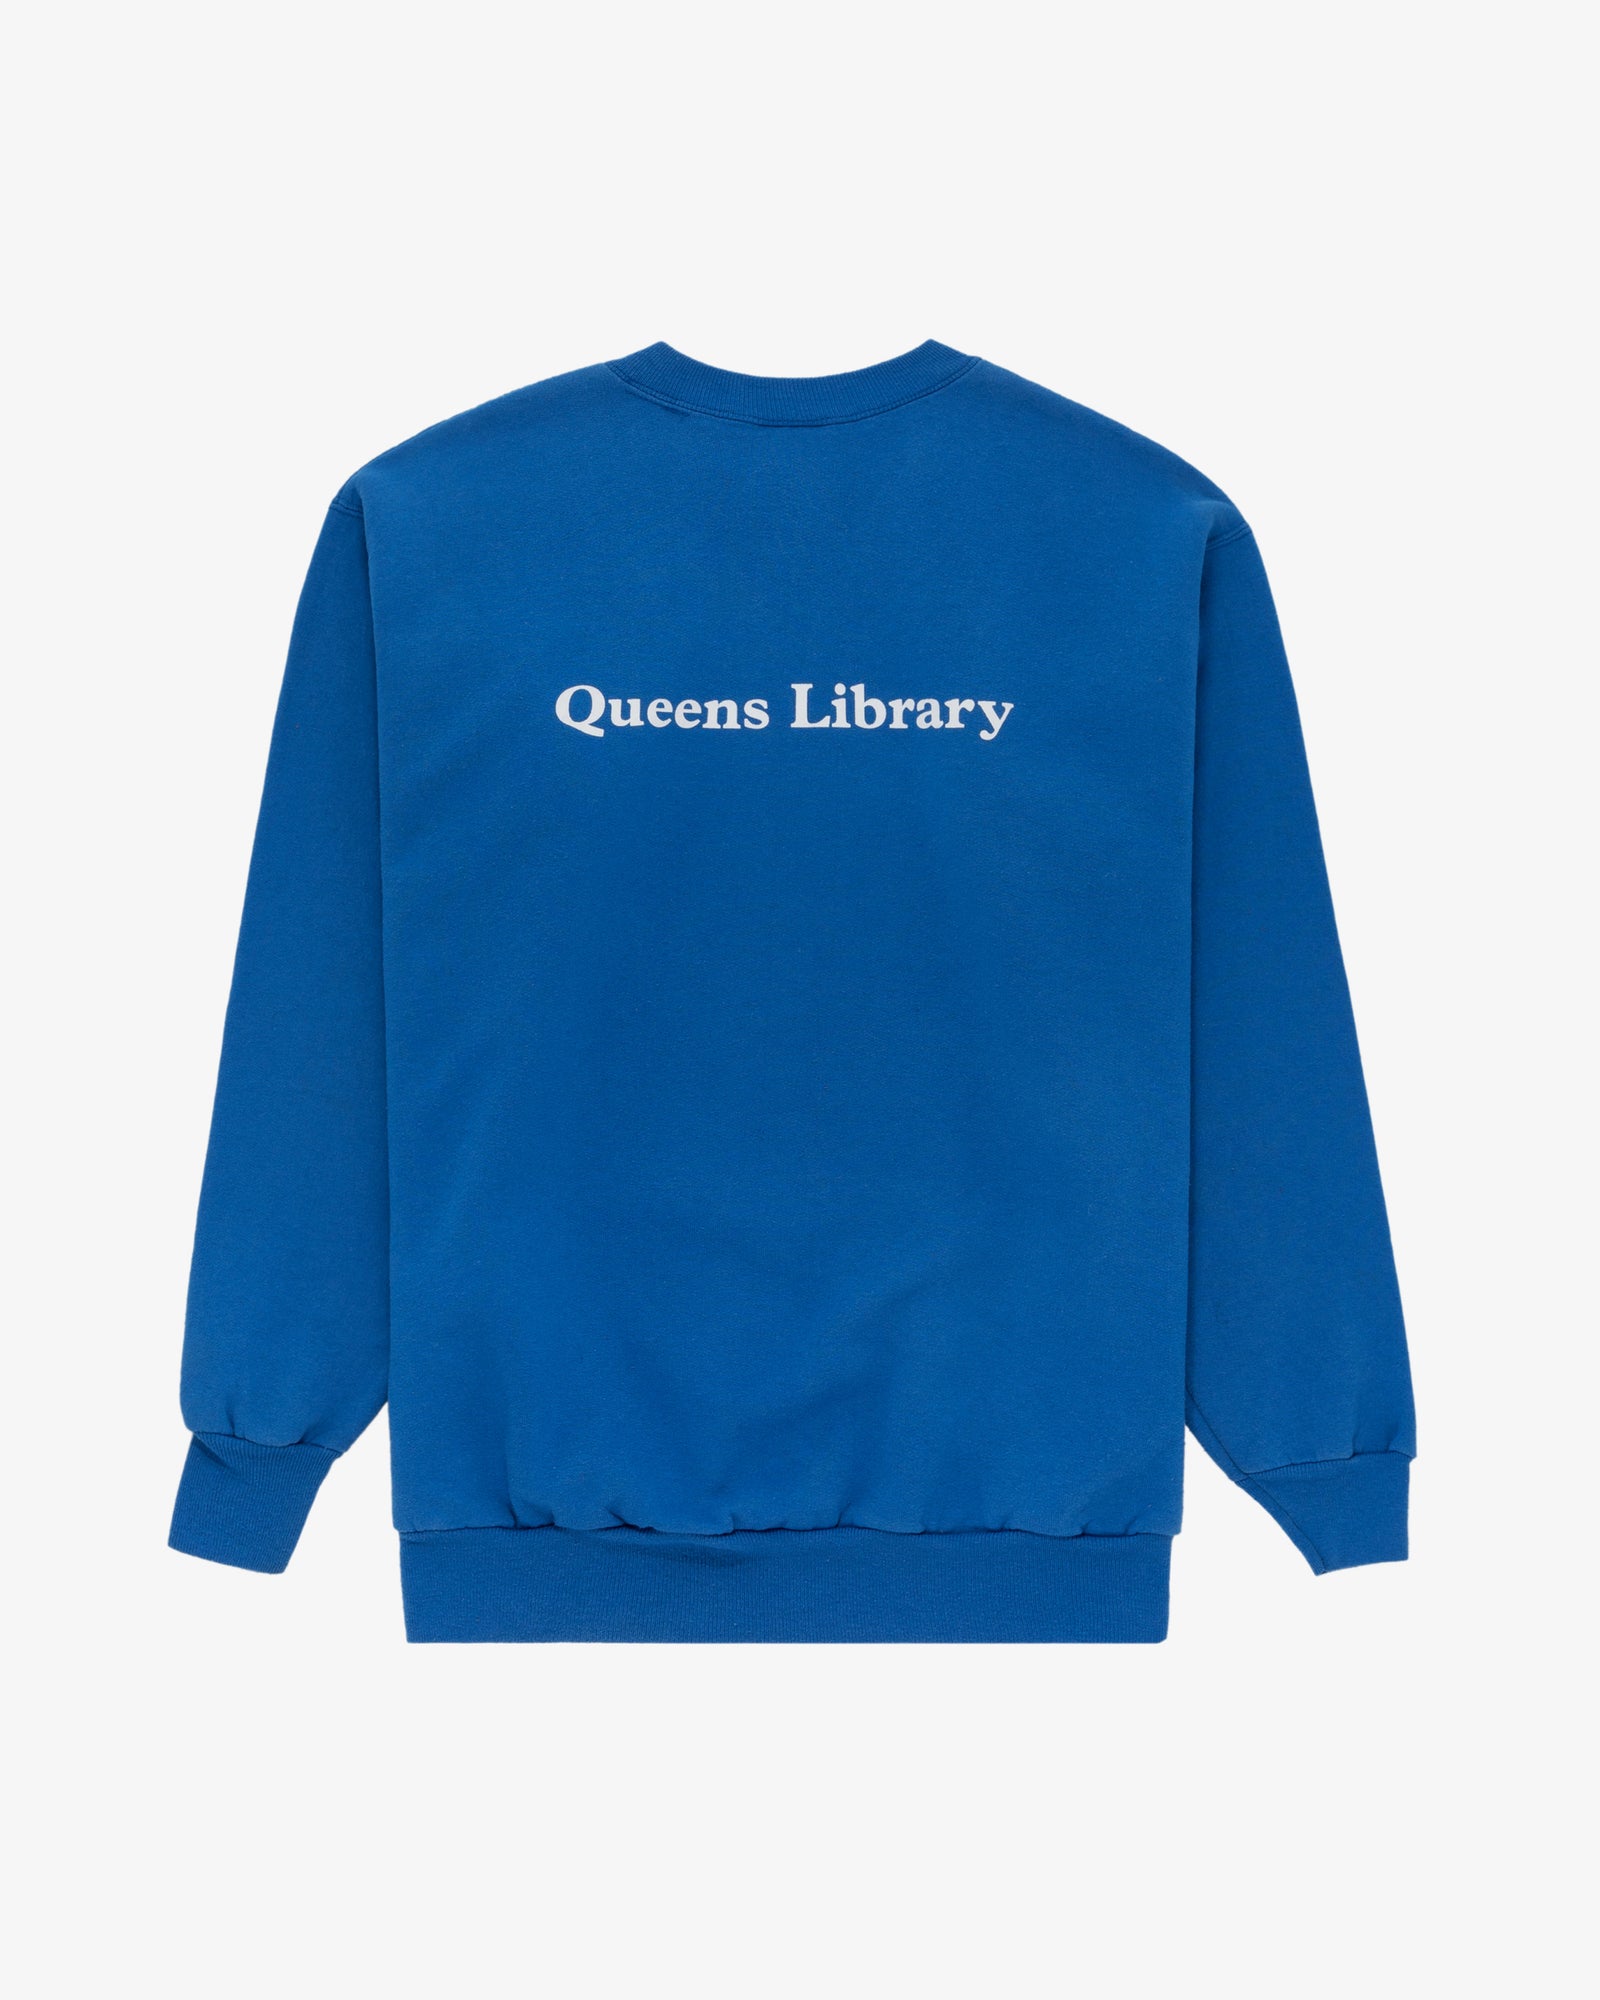 Vintage Queens Library Sweatshirt